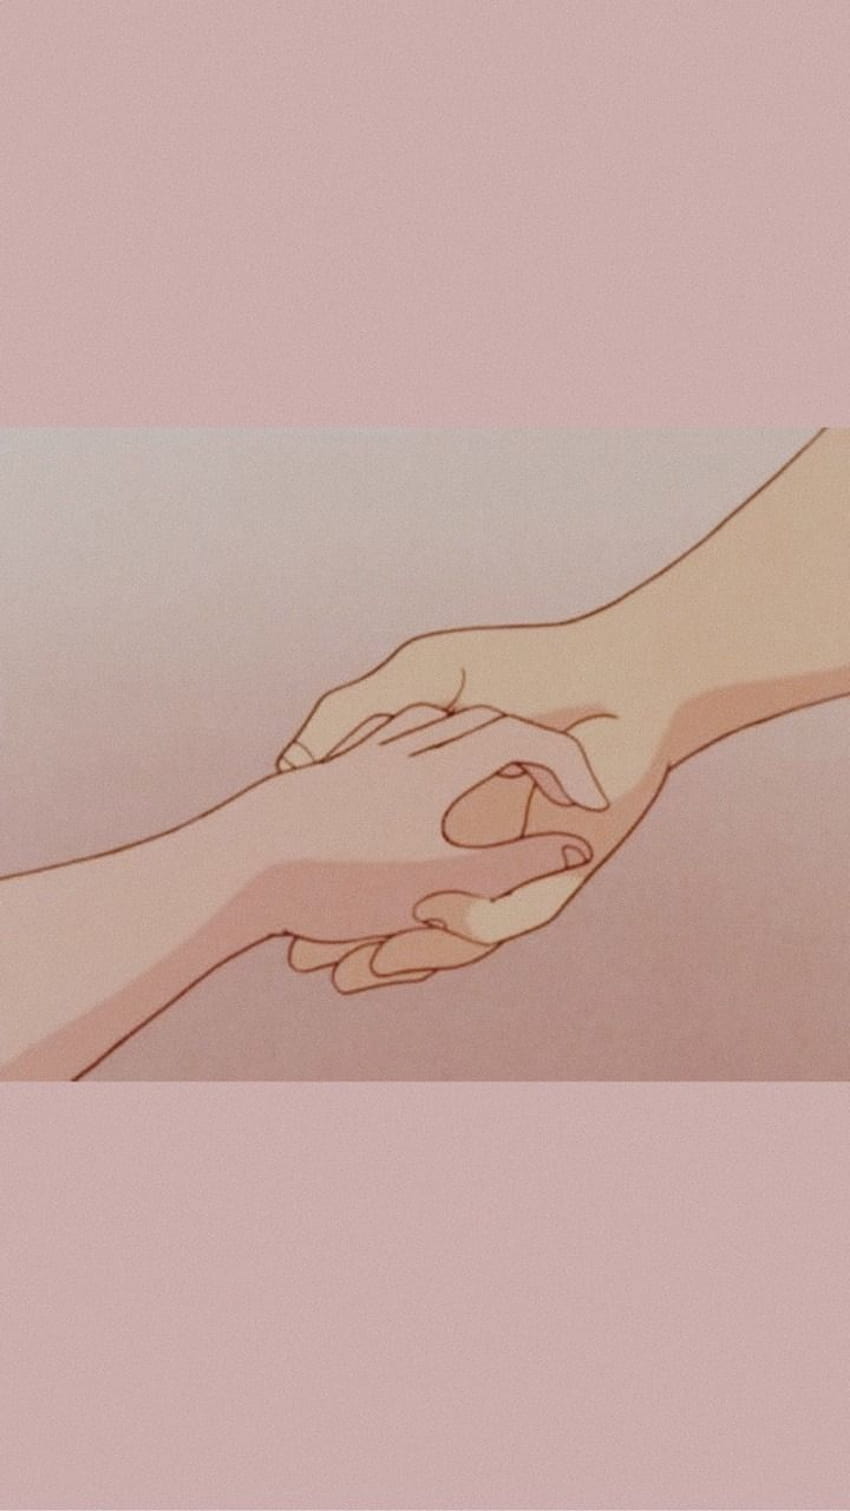  on Twitter taekook holding hands as anime couple a short cute thread  httpstcofBLnPNsyW3  Twitter